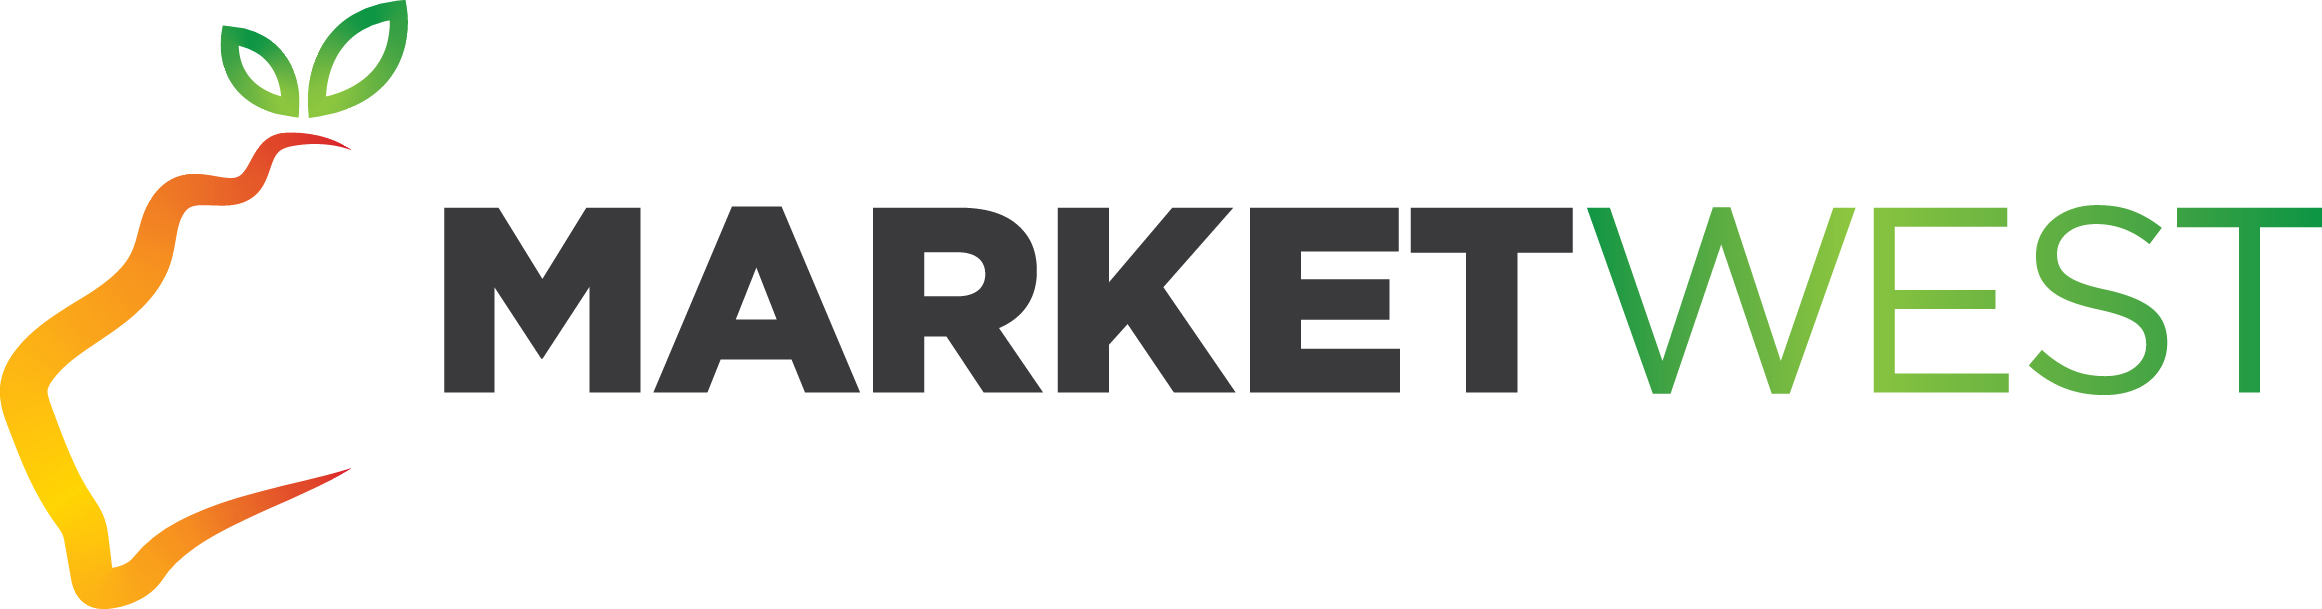 Market West logo